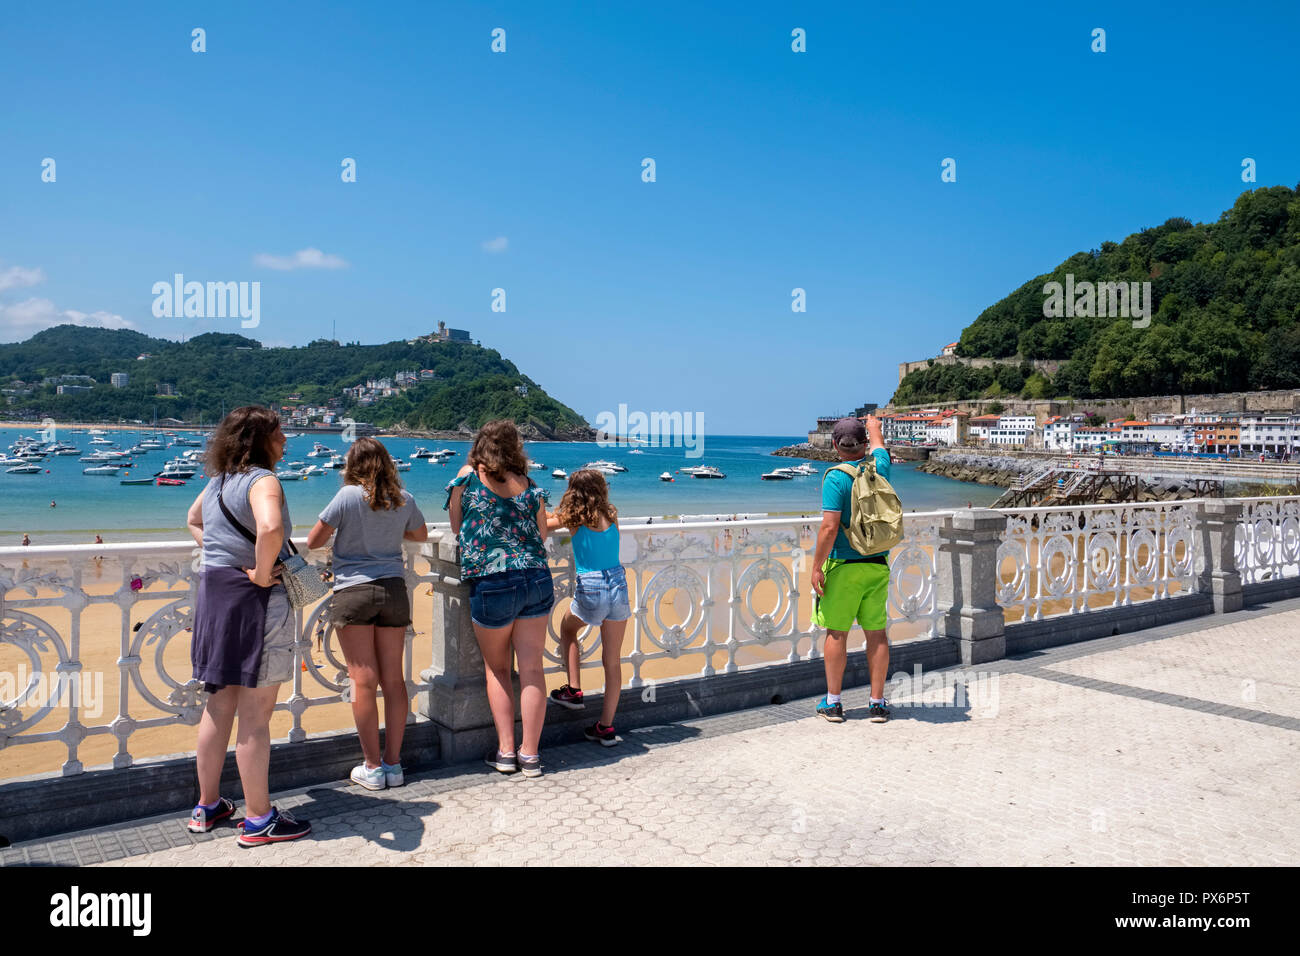 Tourists, promenade and coastline of San Sebastian, Donostia, in the Basque Country, Spain, Europe Stock Photo